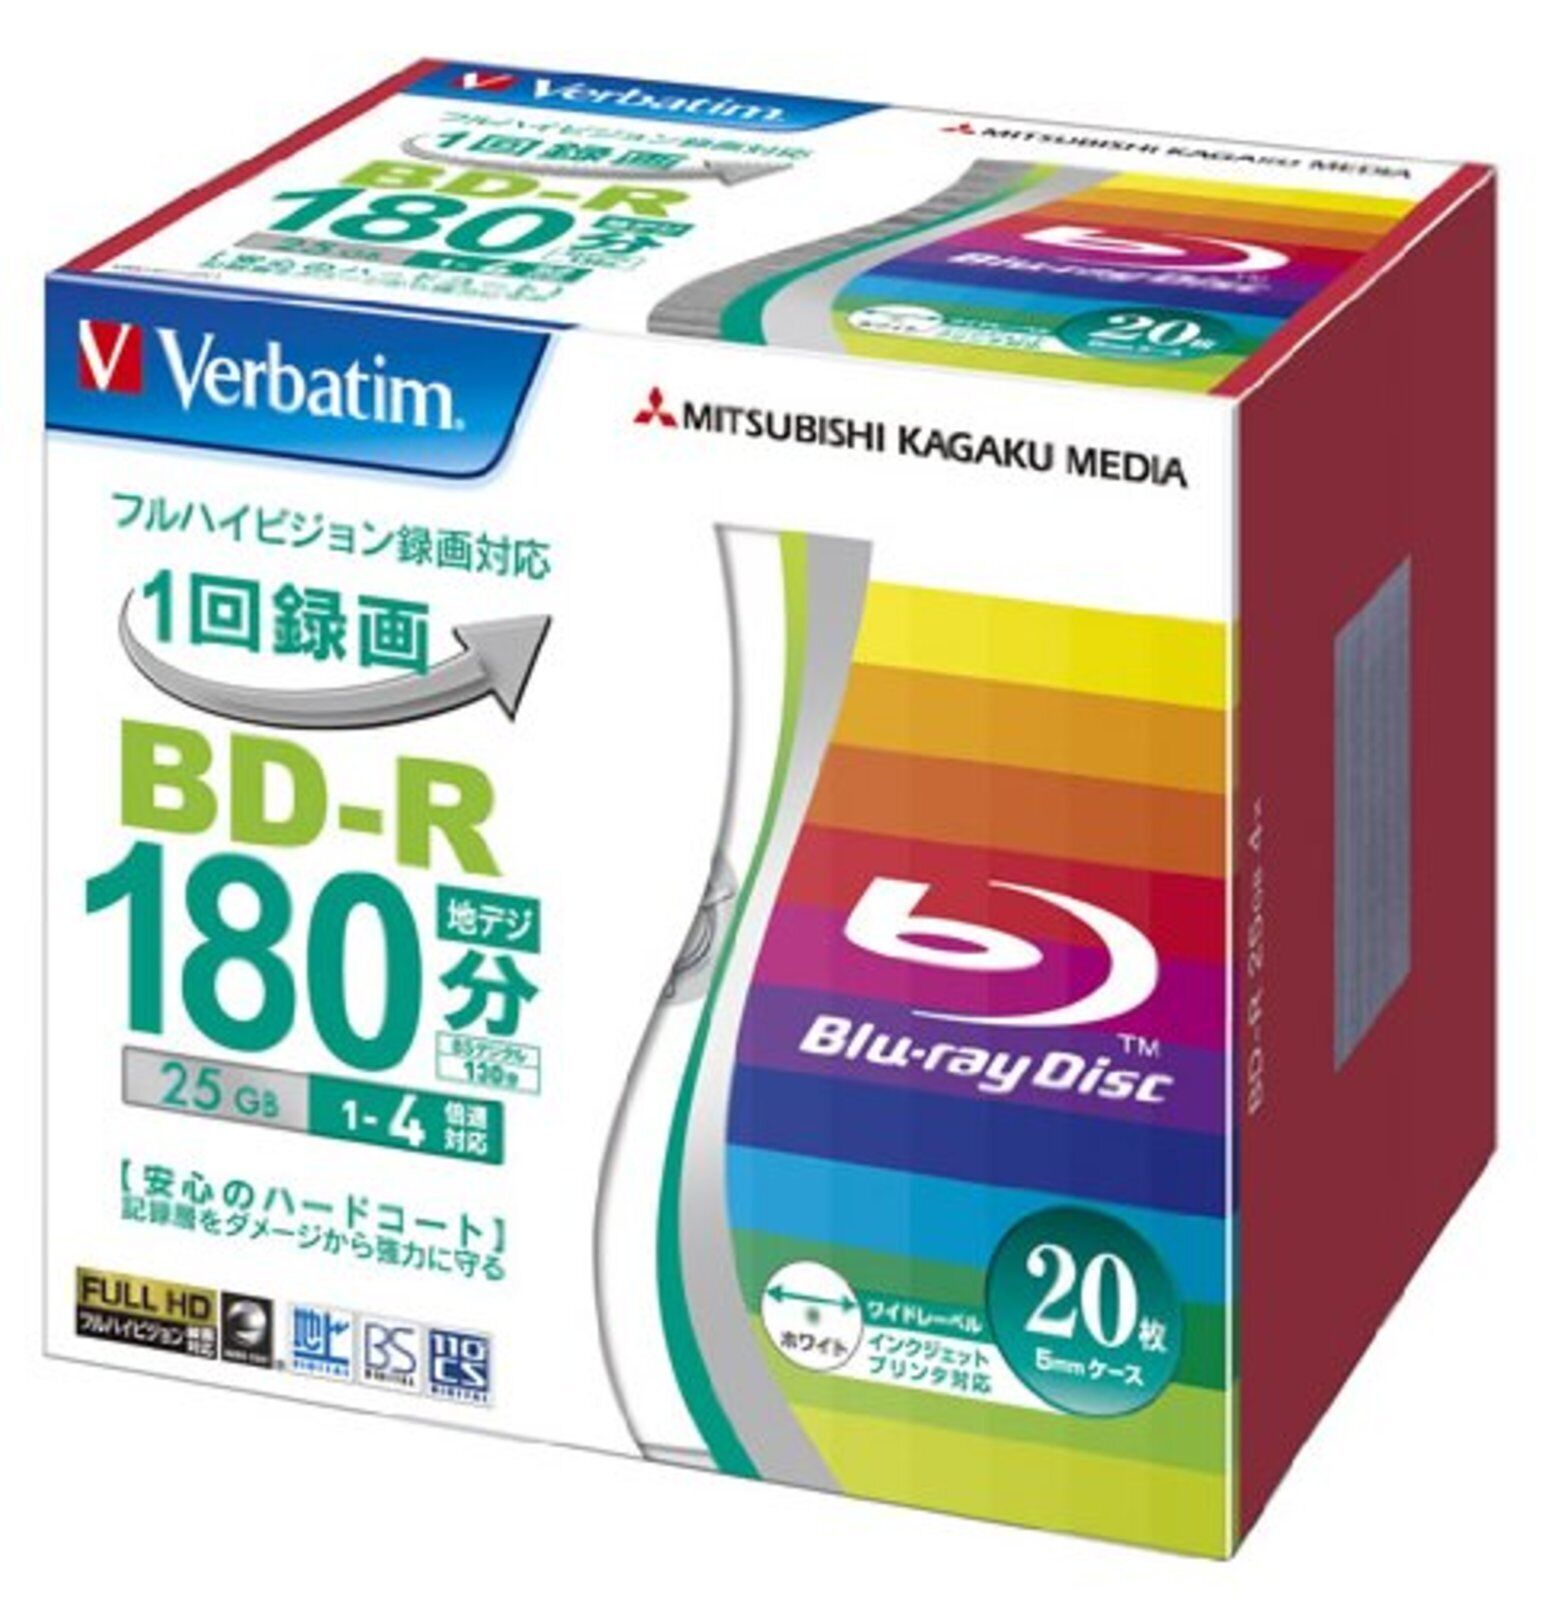 Verbatim Bluray 3D 25GB Bluray Video HD 4X BD-R Printable BluRay F/S w/Tracking#